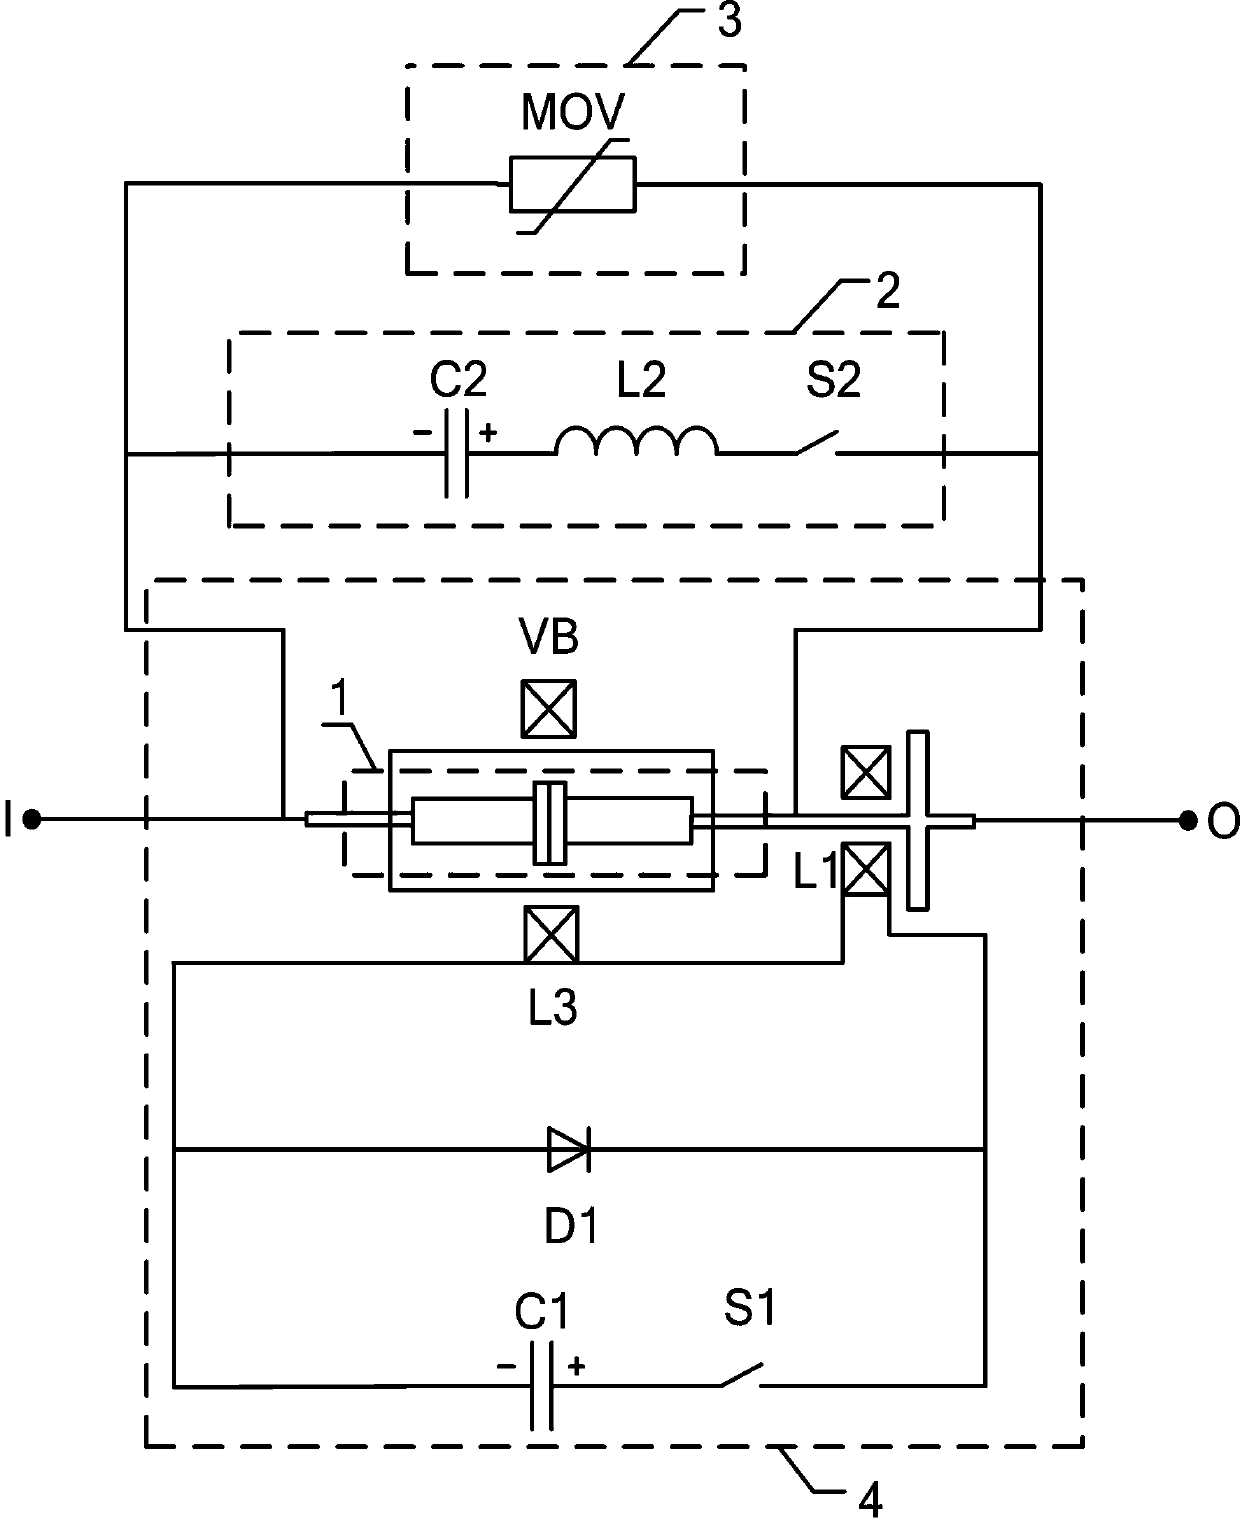 A DC vacuum circuit breaker